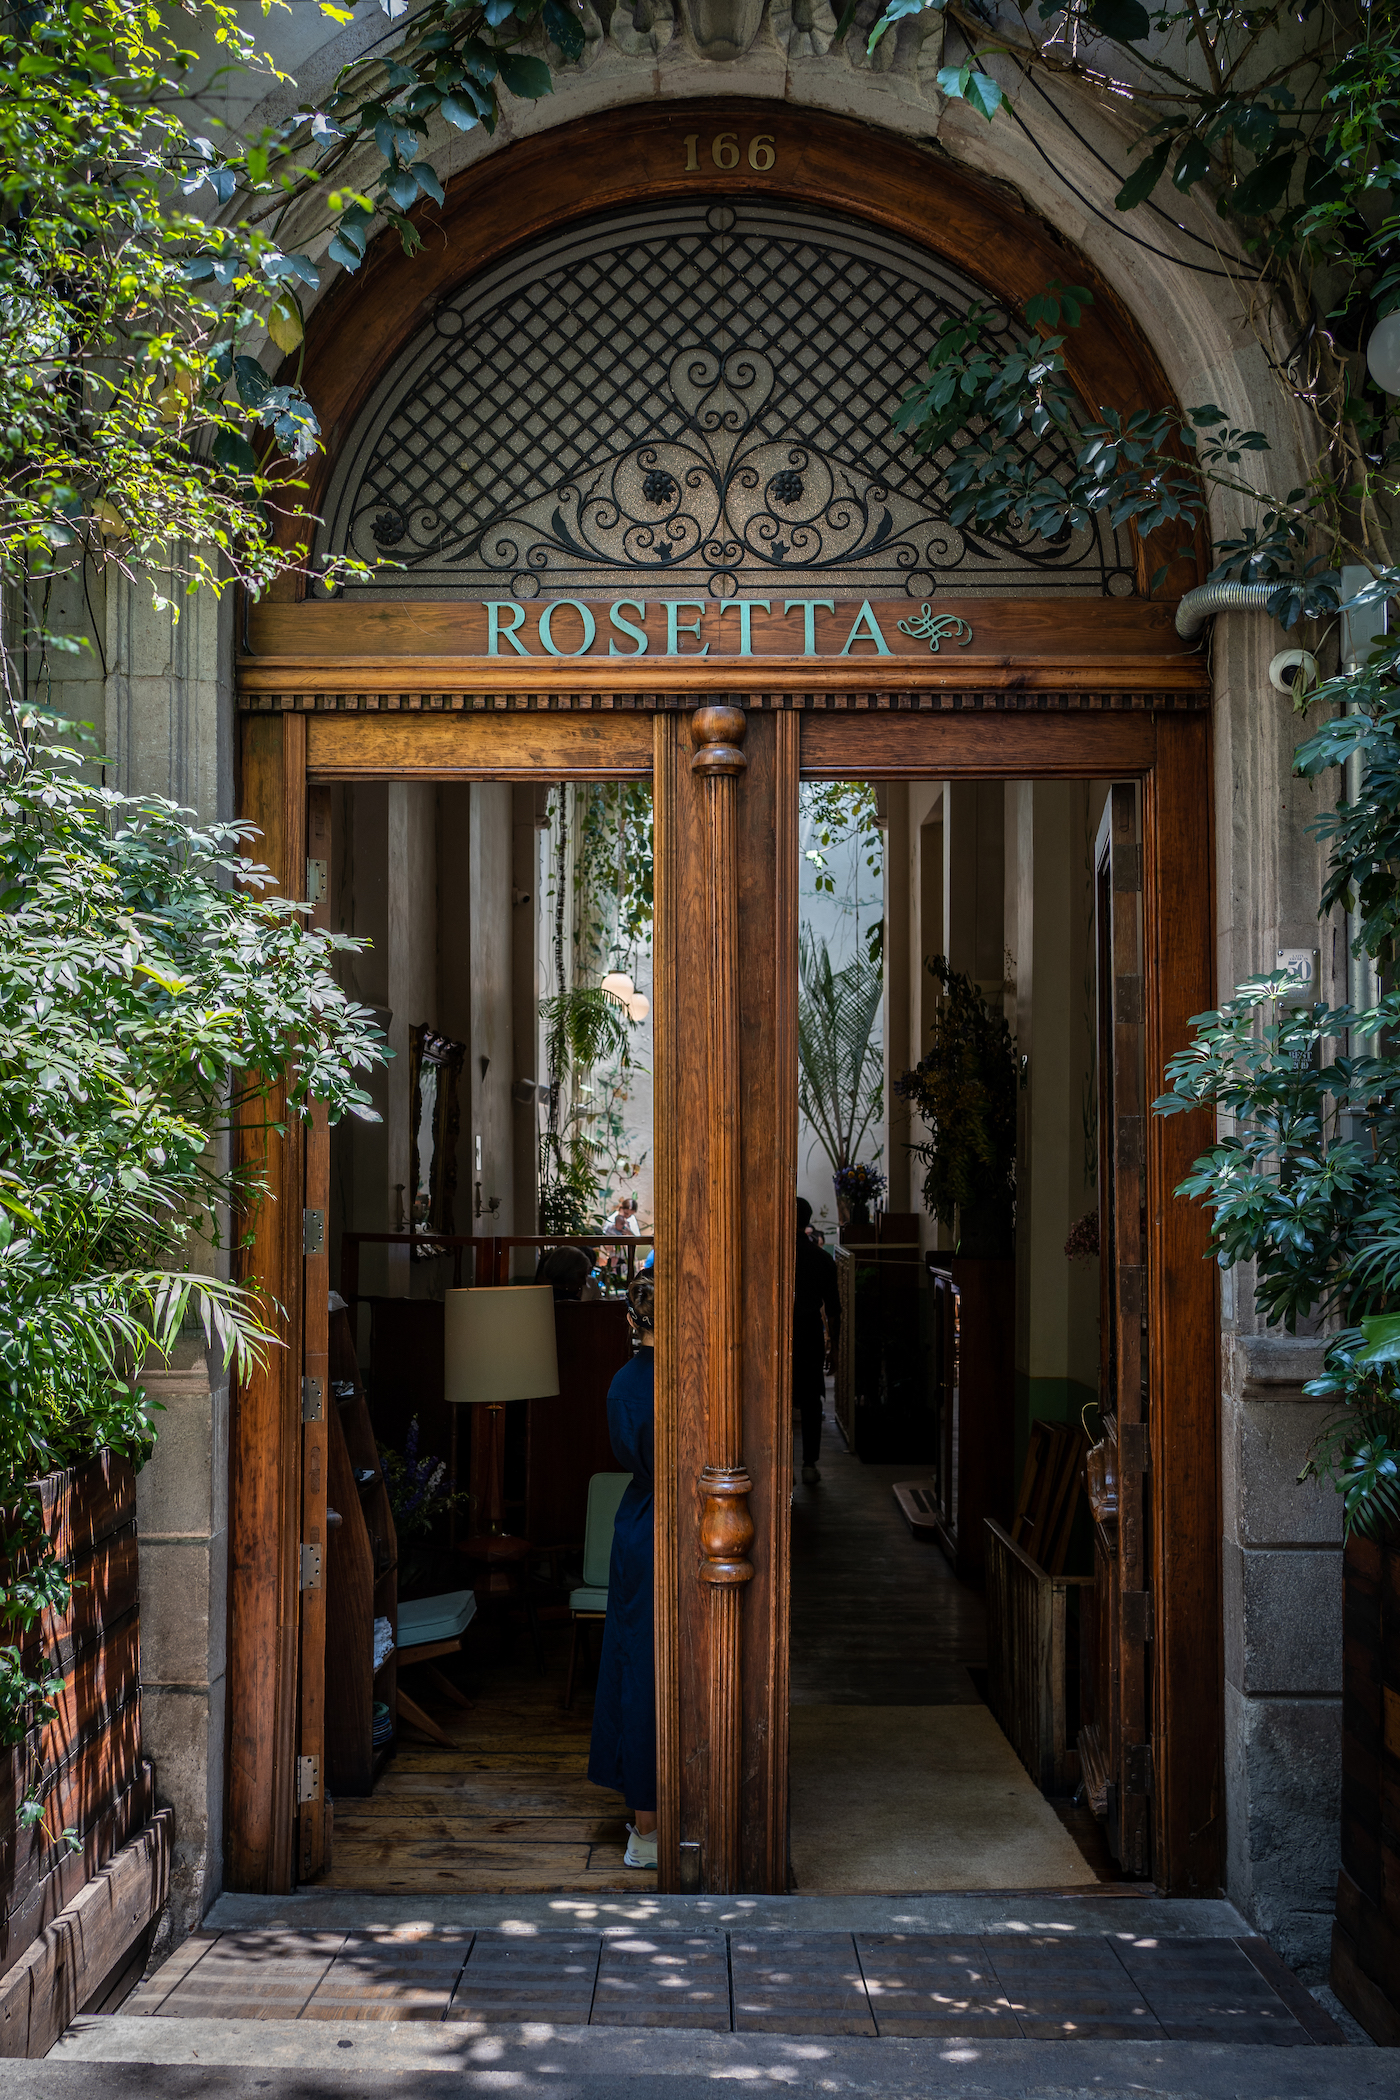 Restaurante Rosetta fresh Pasta Mexico City doorway